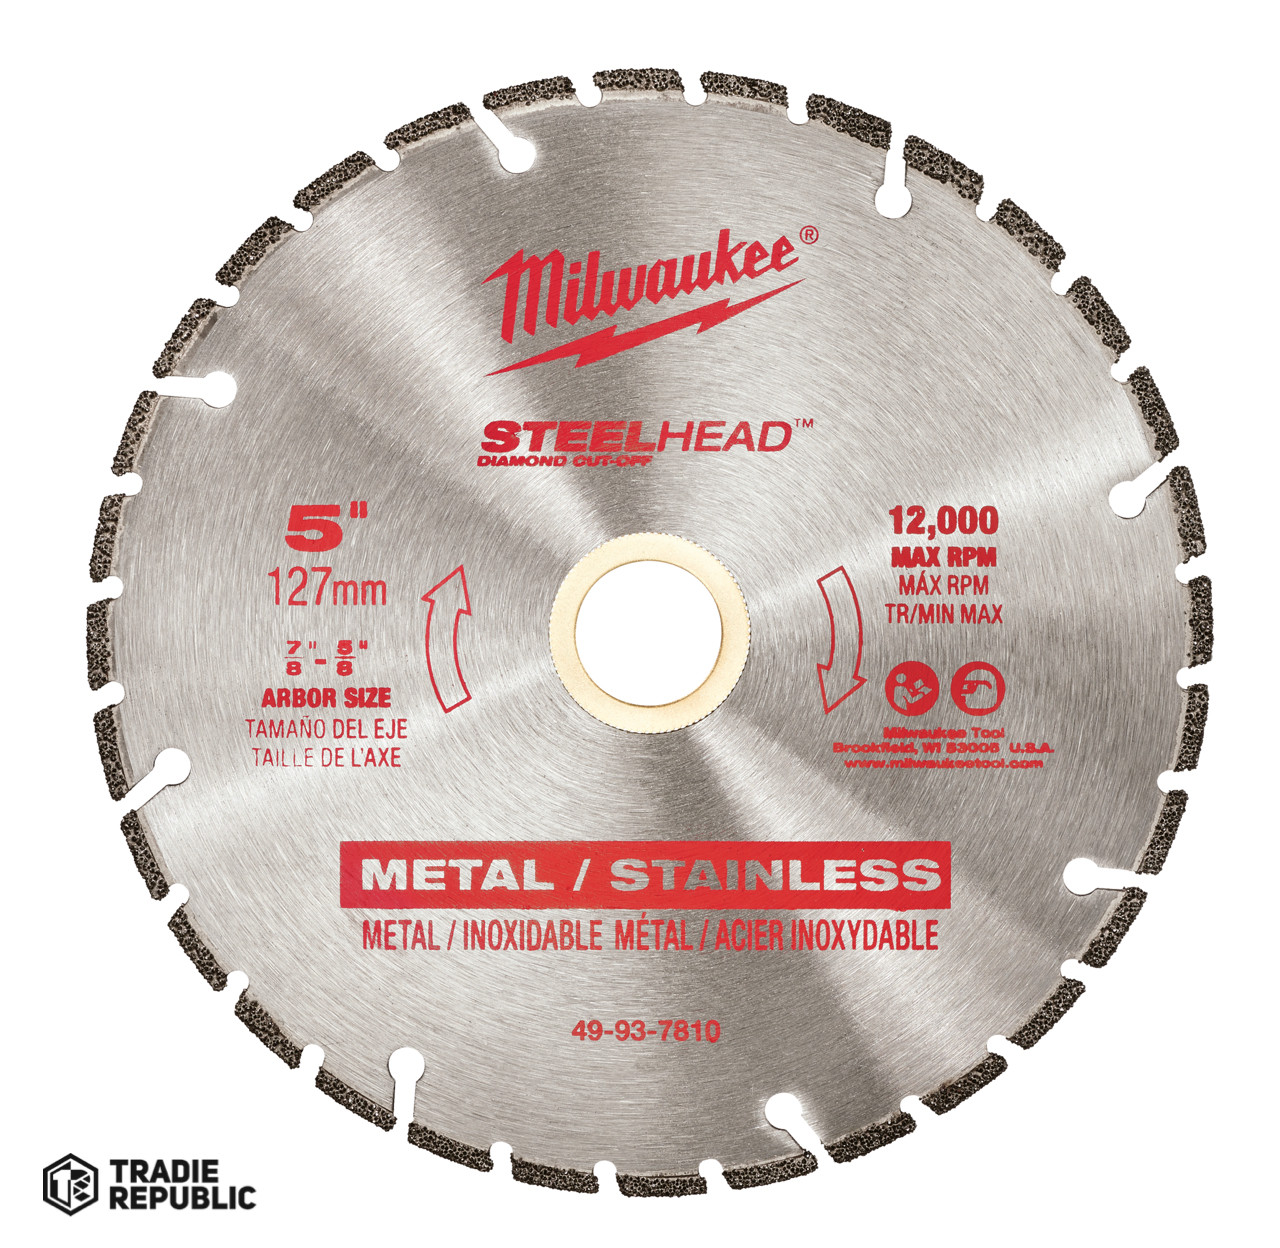 49937810 Milwaukee Steelhead Diamond CutOff 5IN 125mm